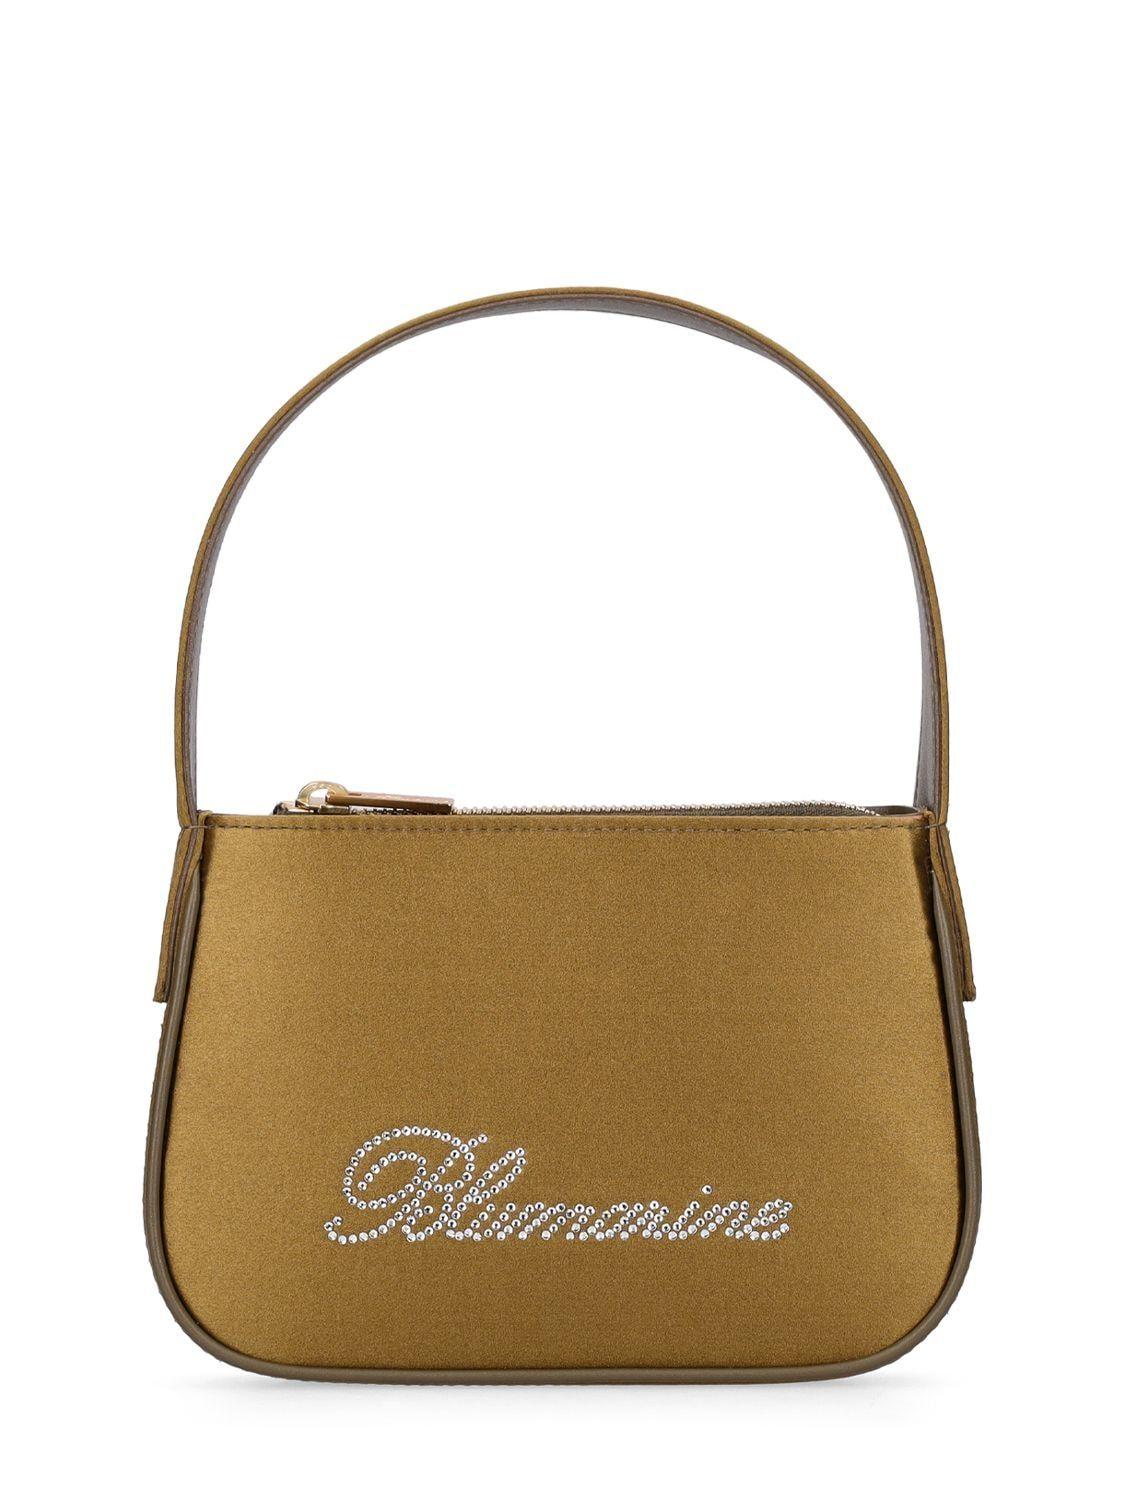 Blumarine Logo Satin Top Handle Bag in Metallic | Lyst